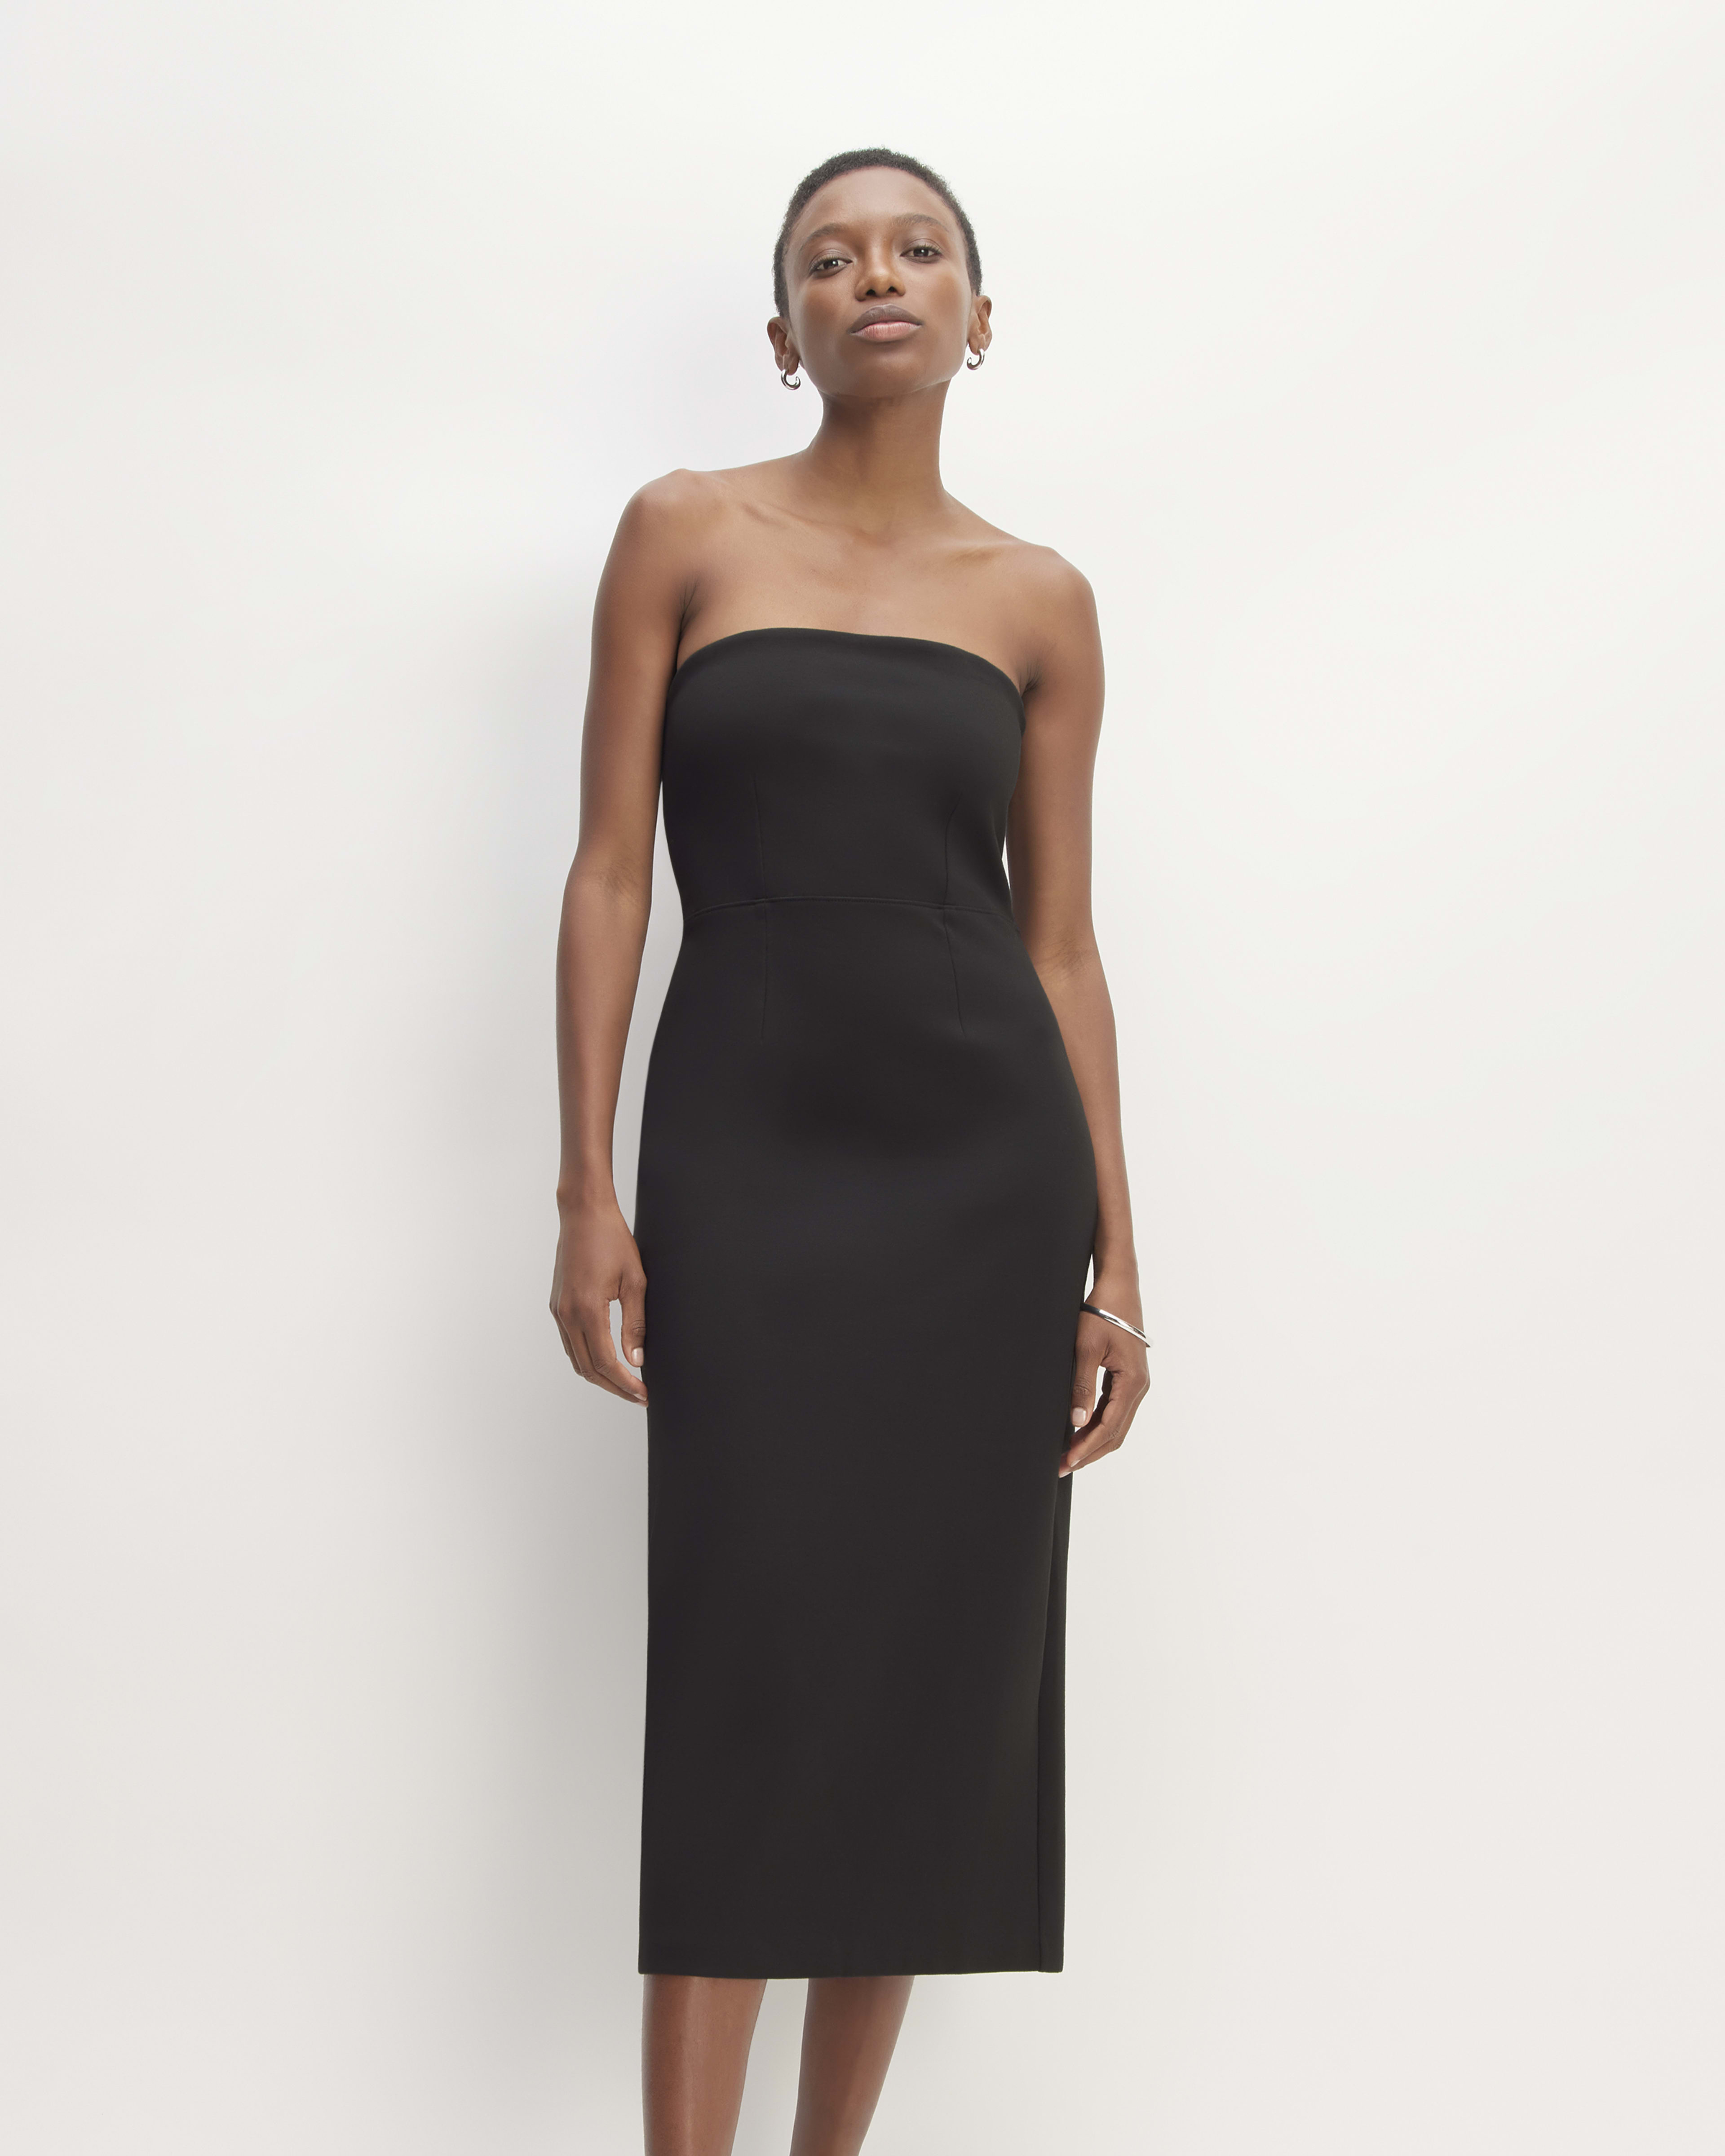 The Dream Strapless Dress Black – Everlane